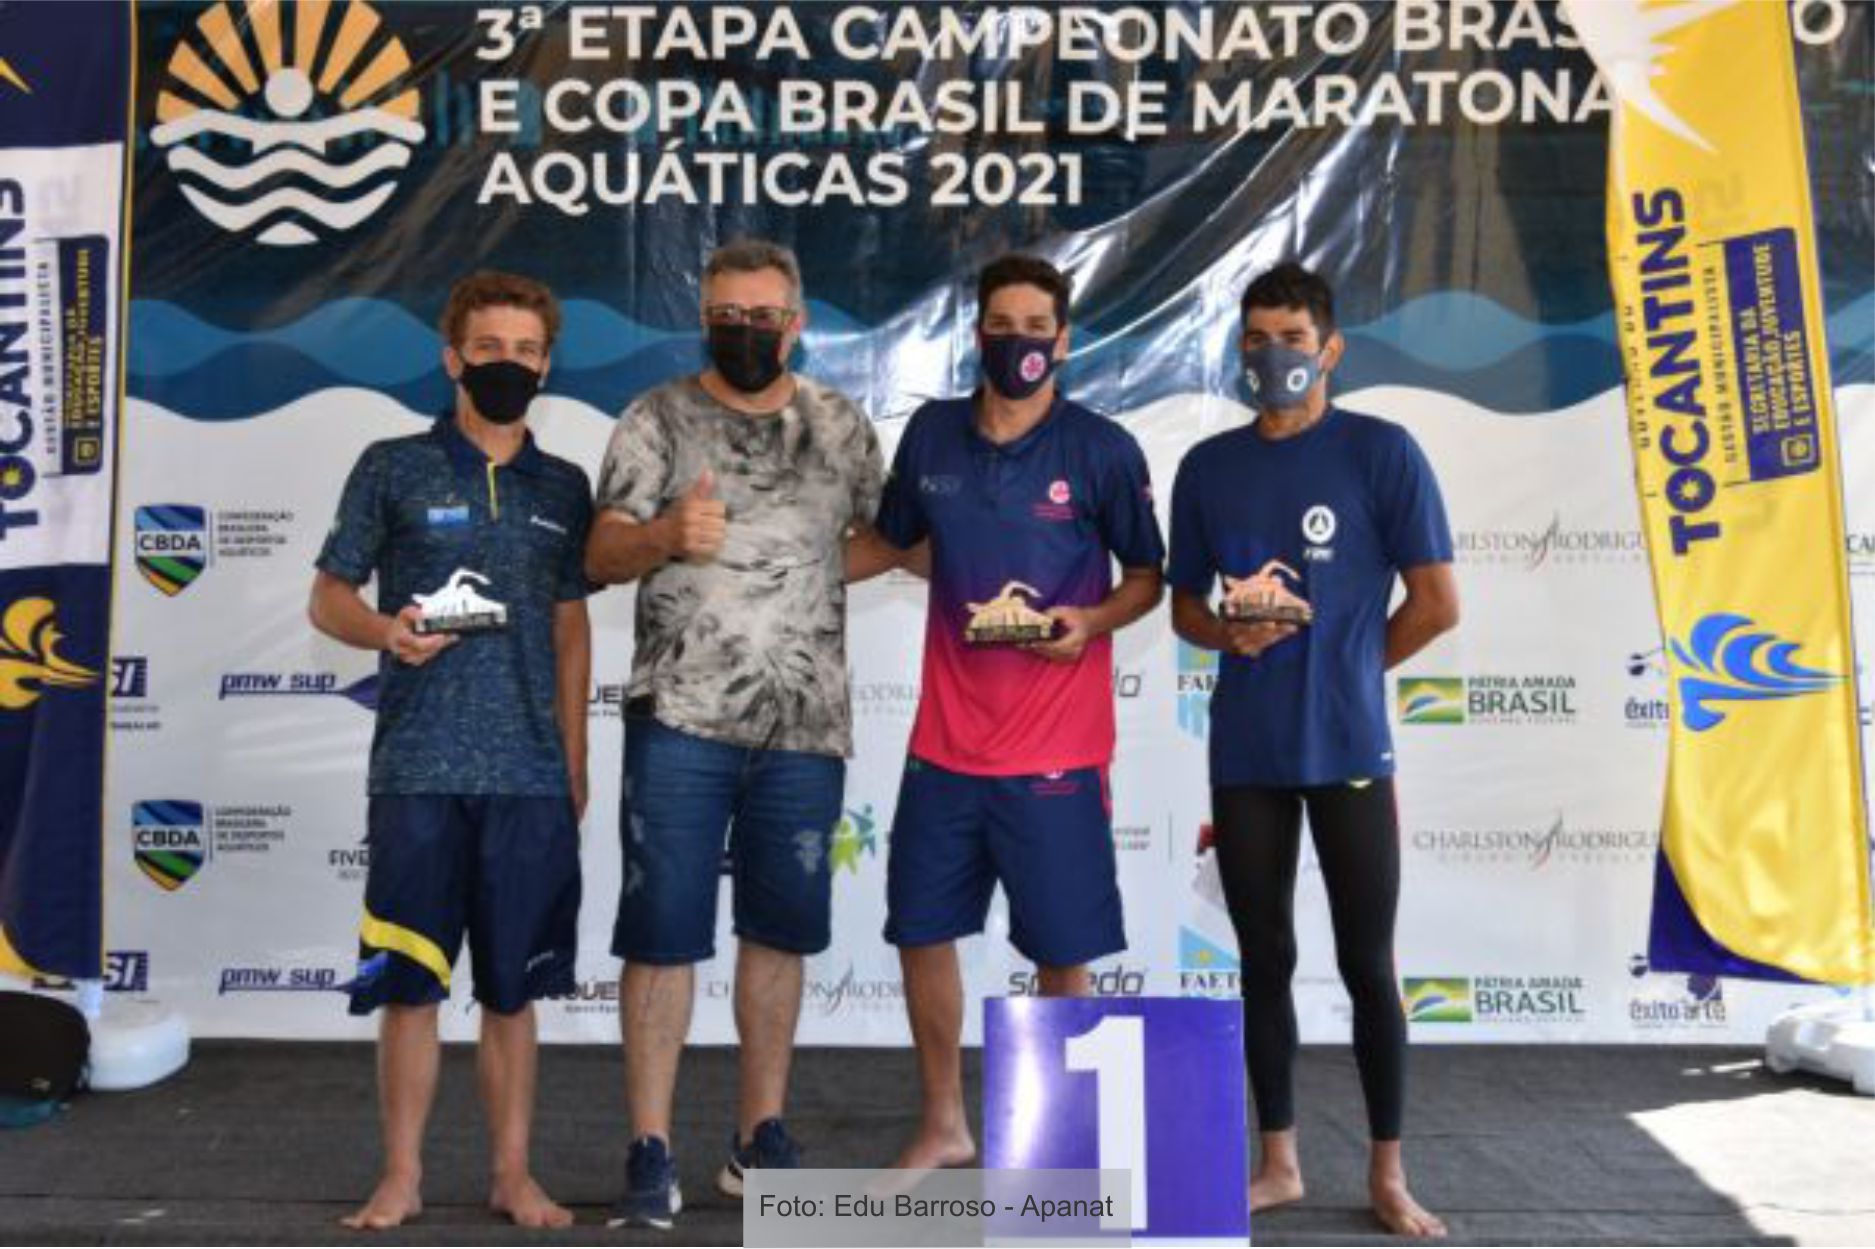 Campeonato Brasileiro Interclubes® - CBI de Maratonas Aquáticas - 3ª etapa - Masculino